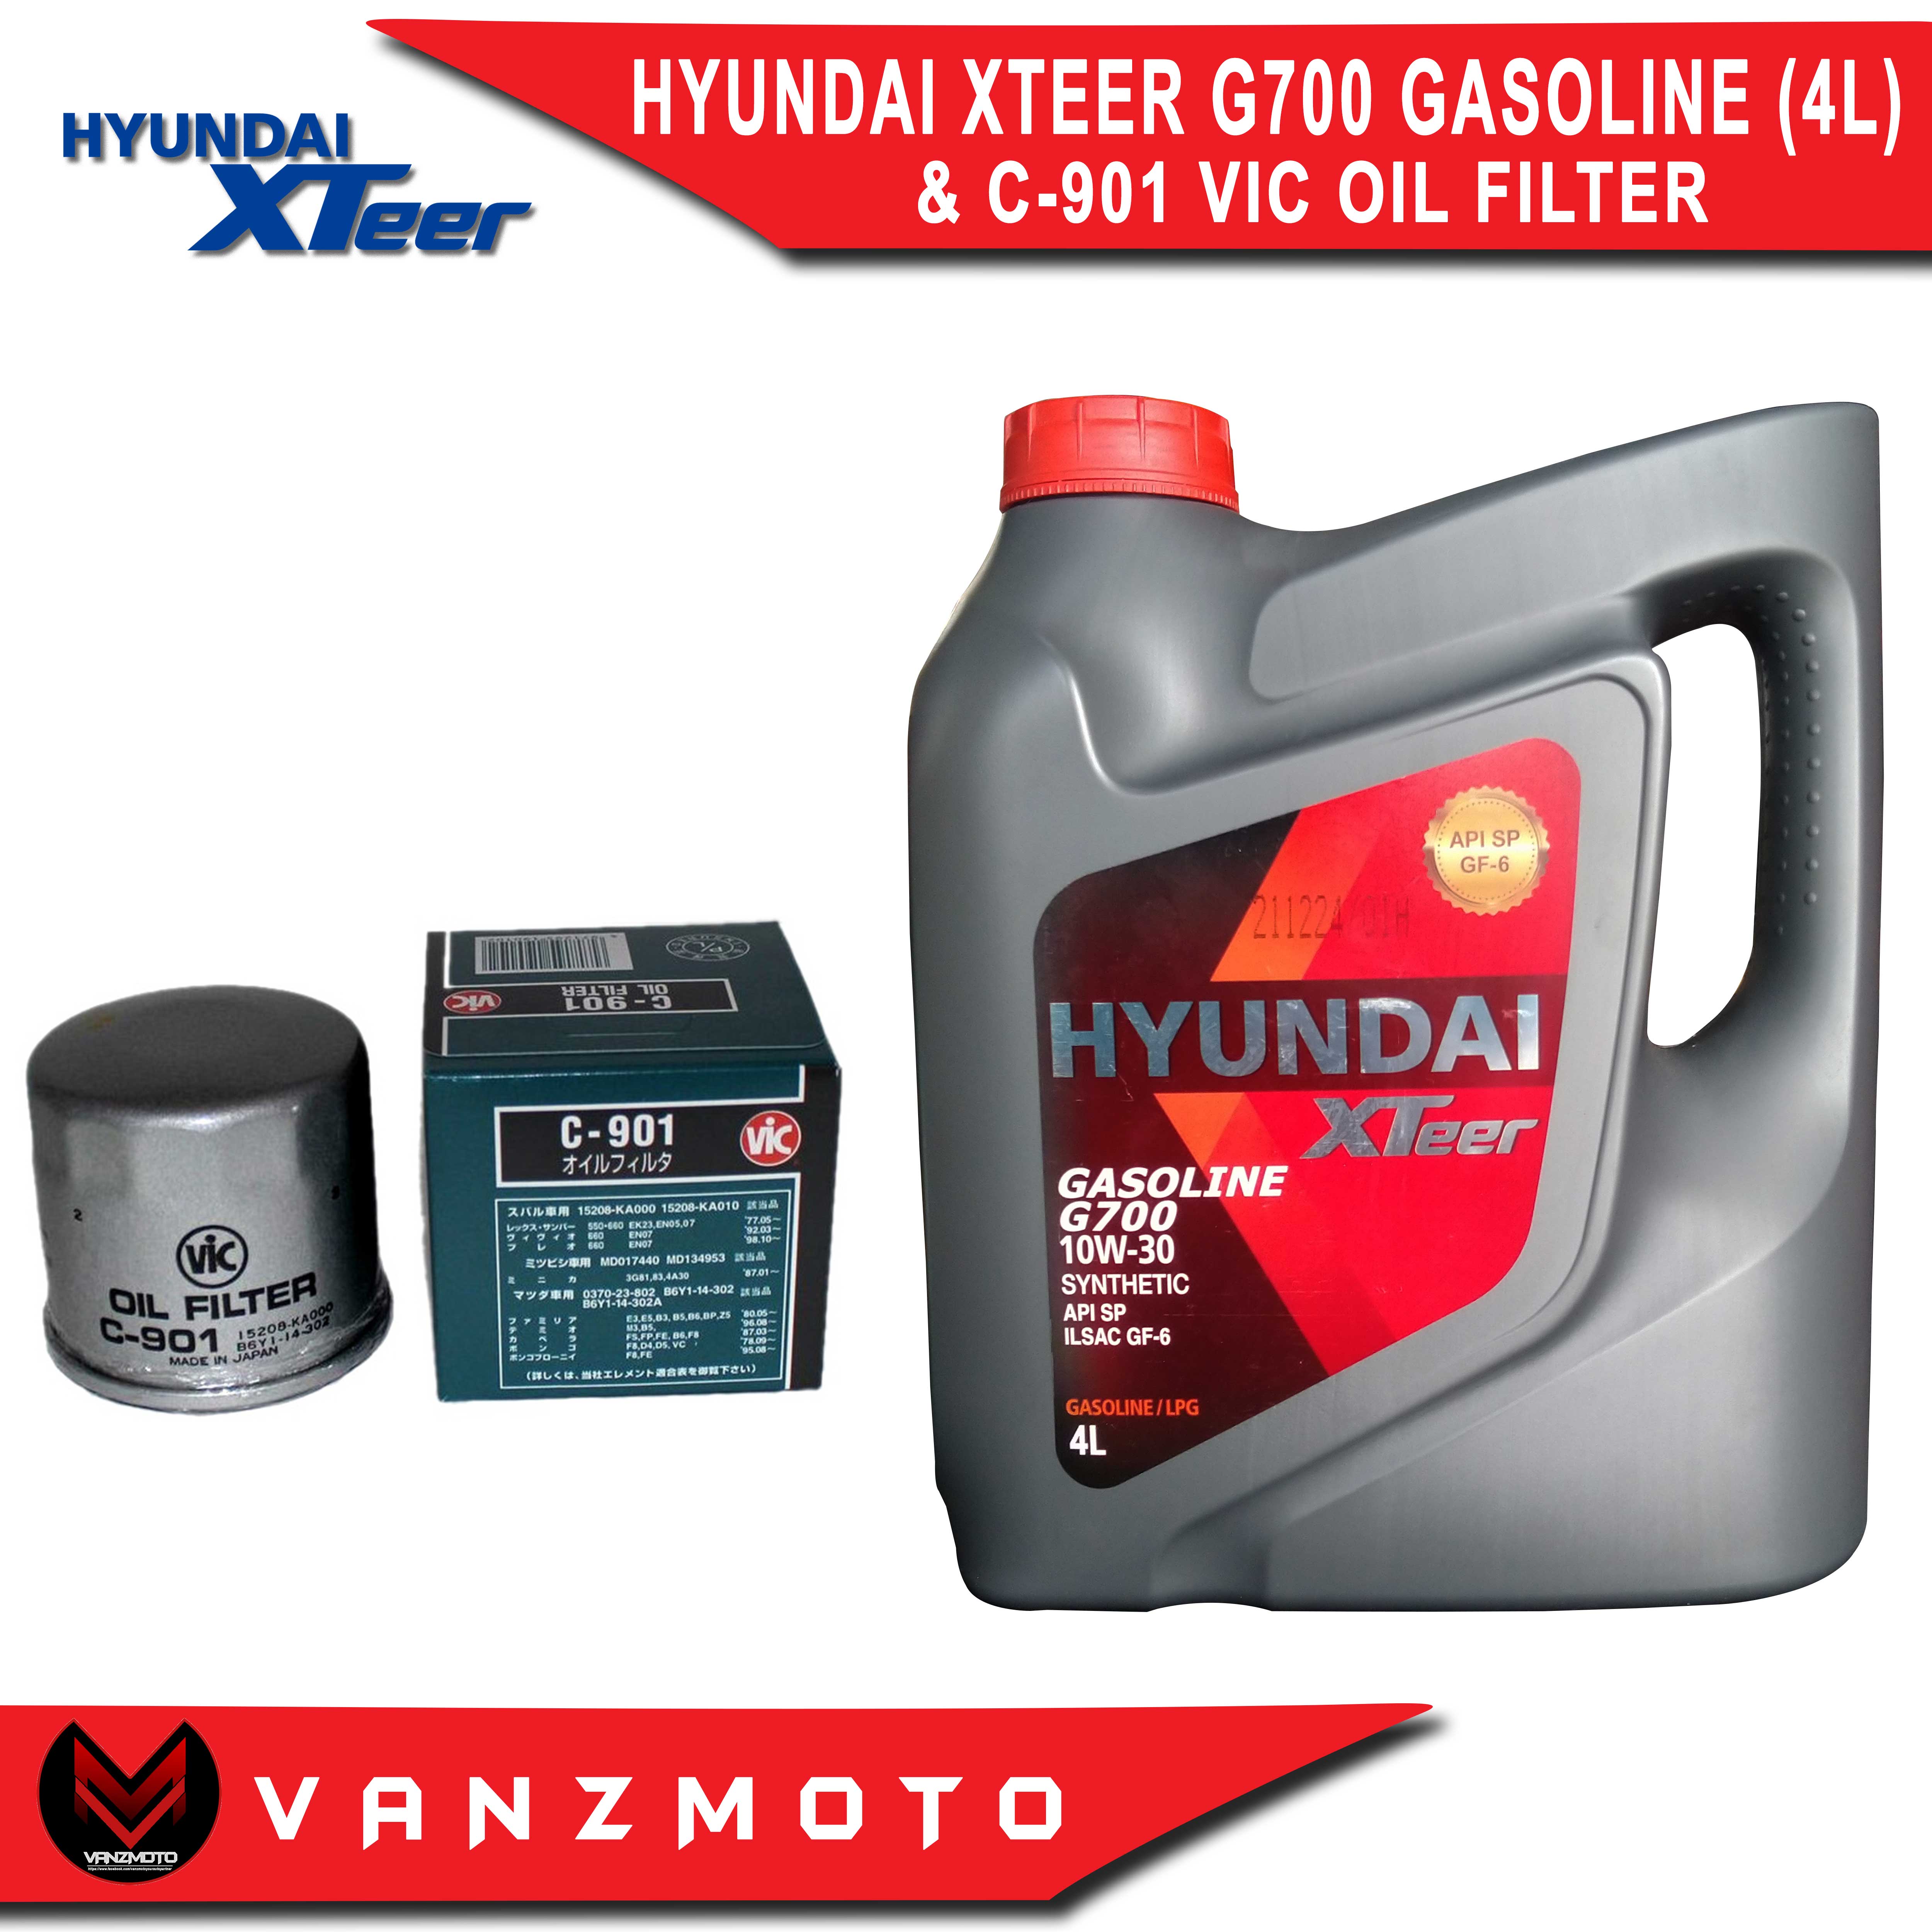 Hyundai xteer gasoline g700